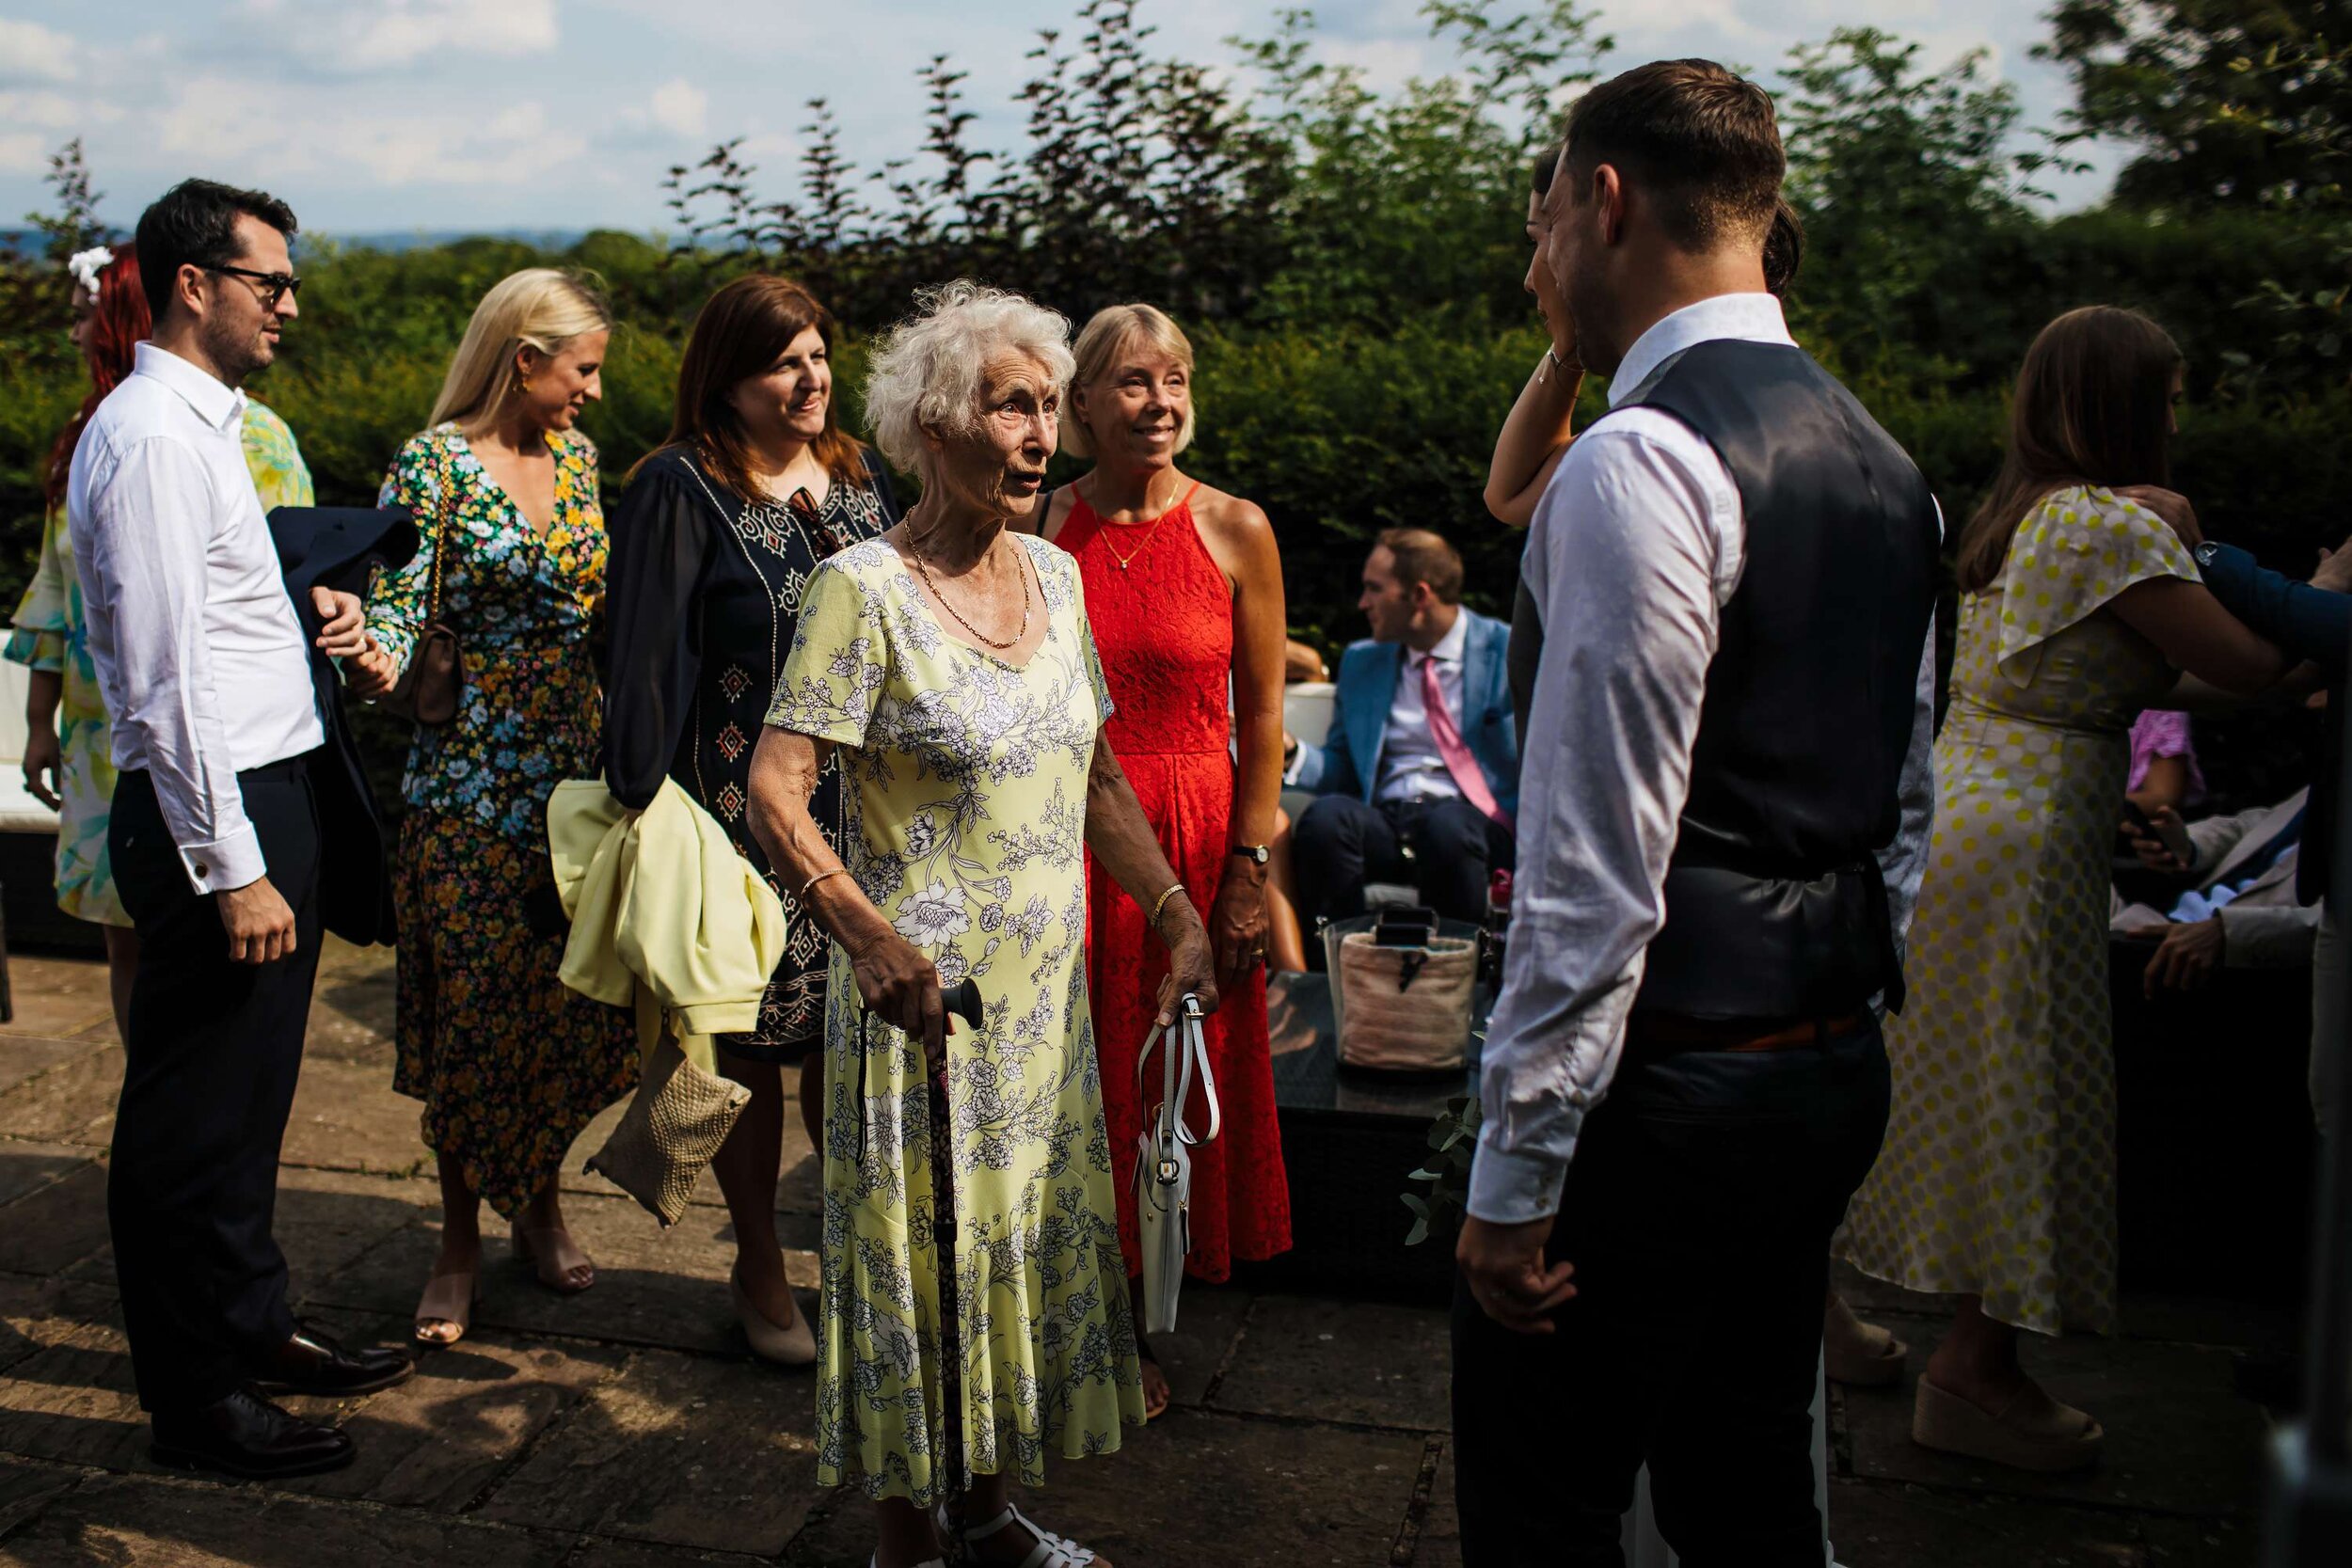 Gran at wedding in Yorkshire